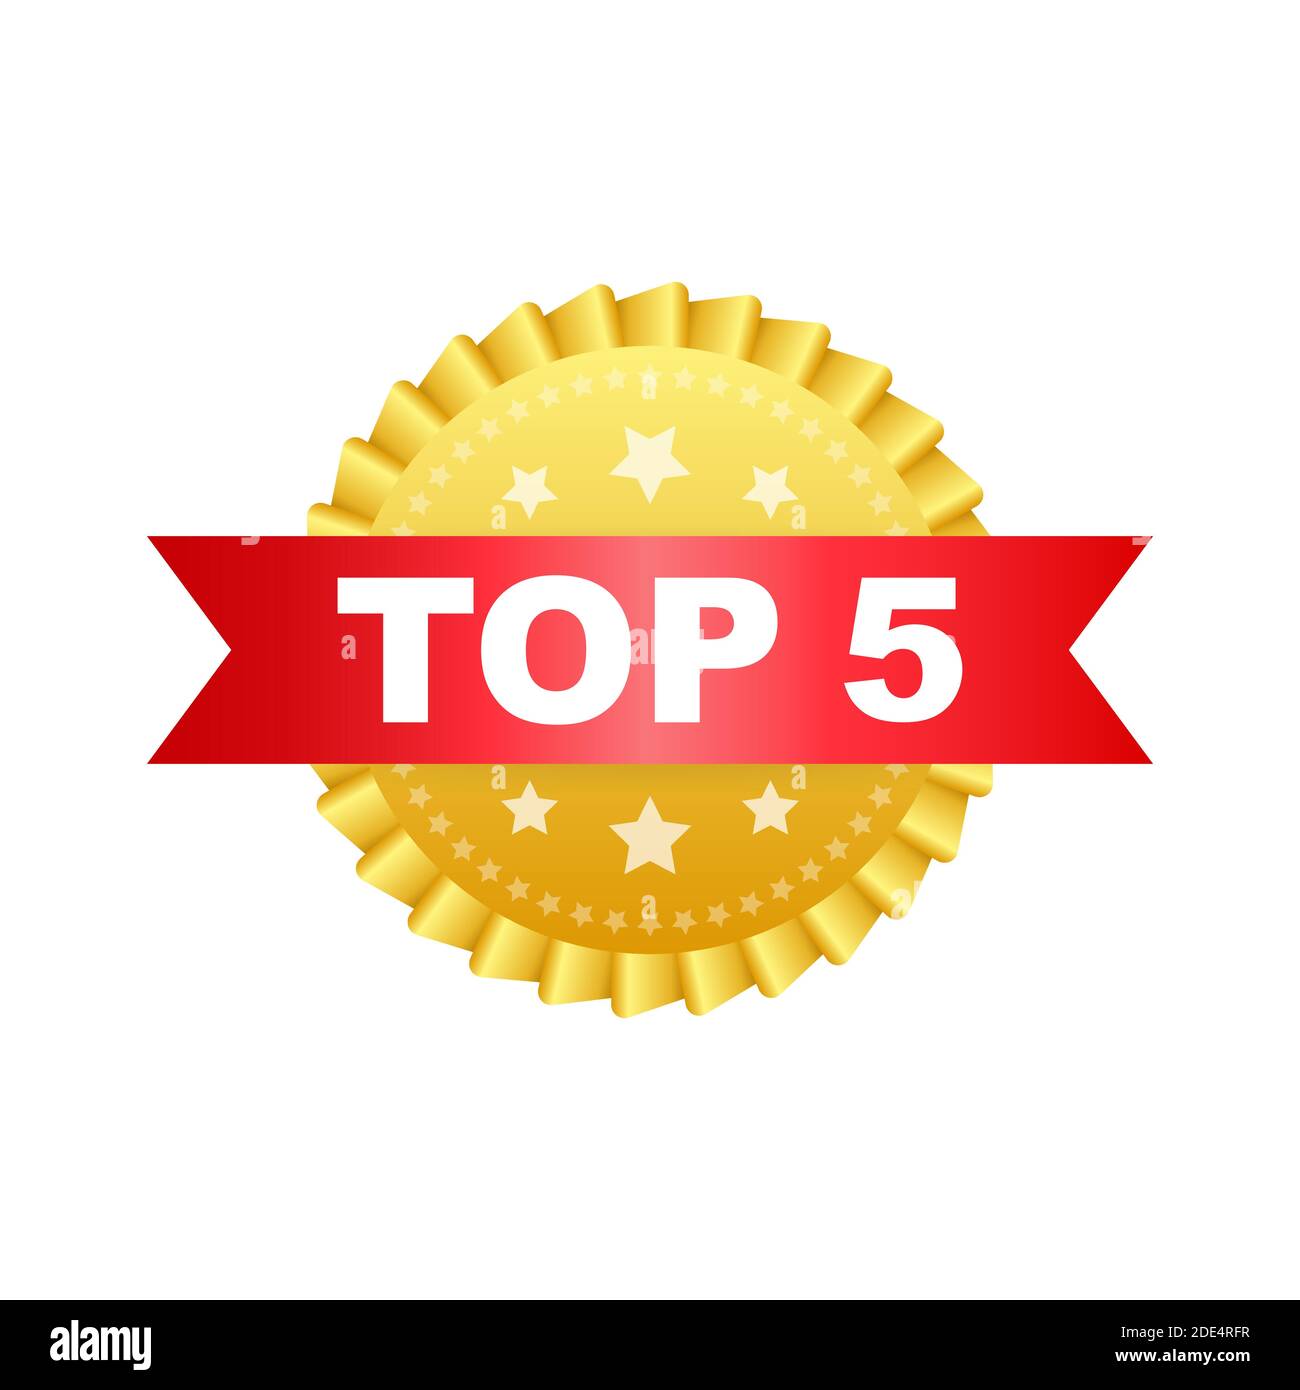 Top 5 label. Golden laurel wreath icon. Vector stock illustration. Stock Vector